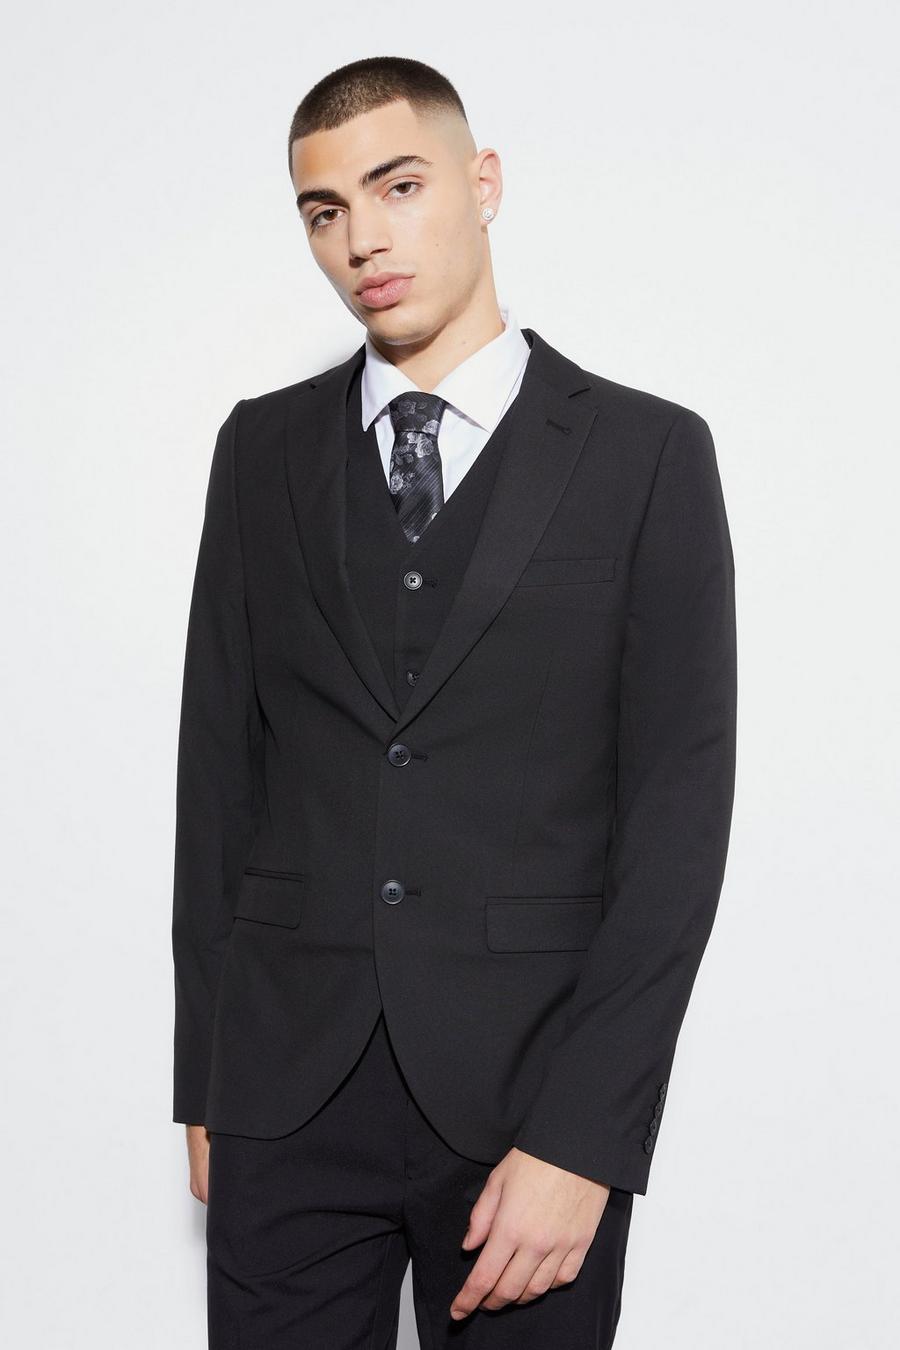 Black nero ז'קט חליפה בגזרת סופר סקיני עם רכיסה בודדת